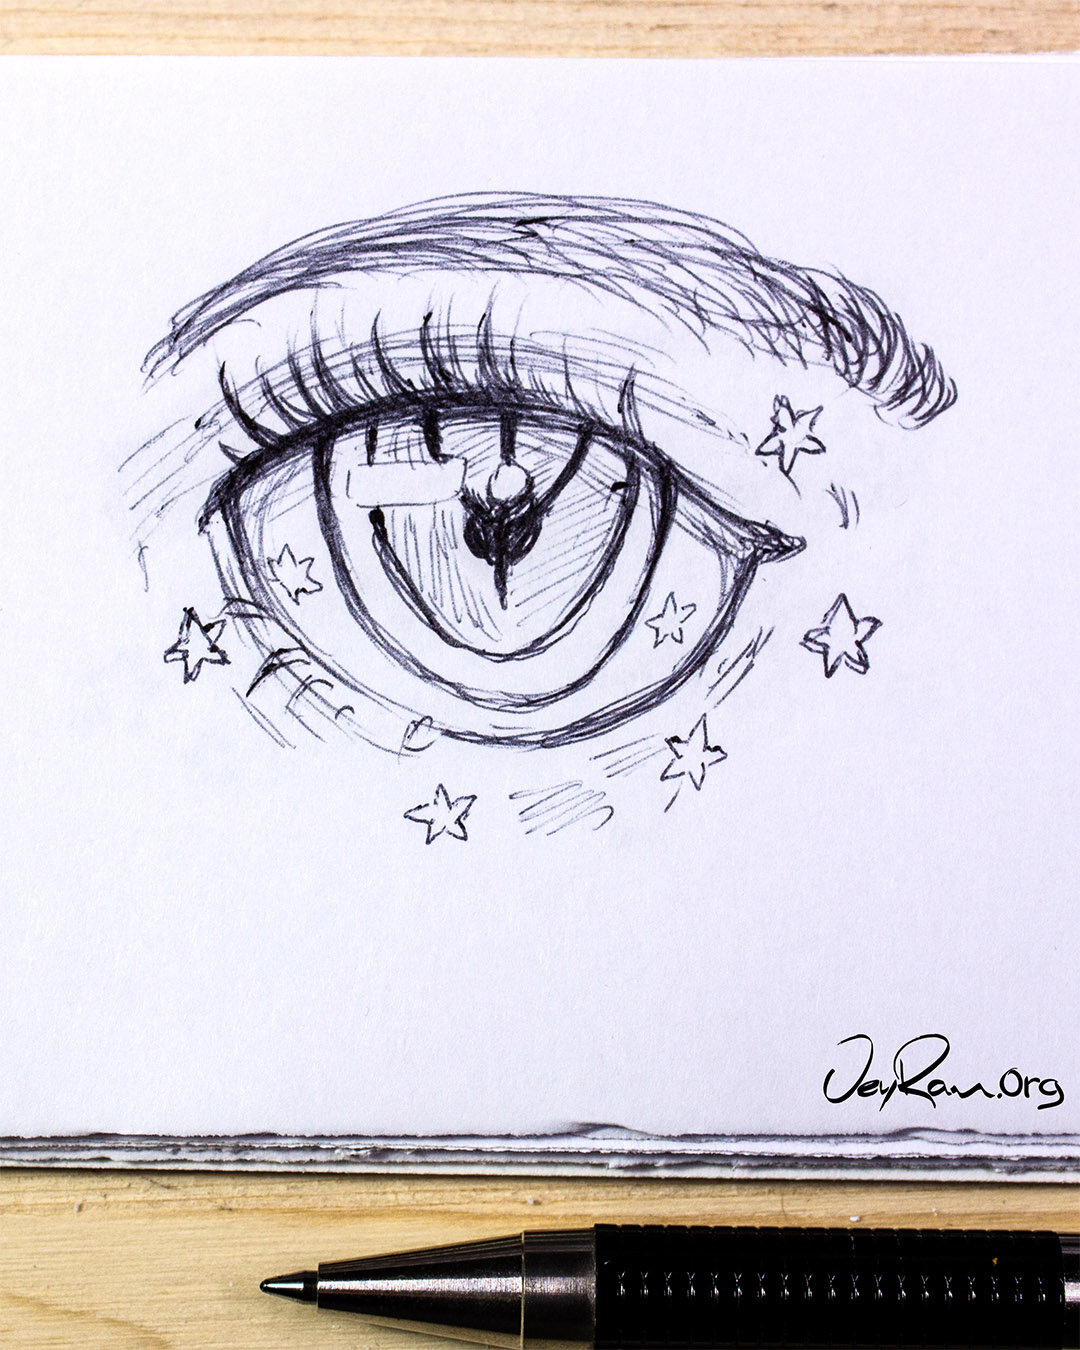 Make me a sketch of an aesthetic anime eye, make it simple